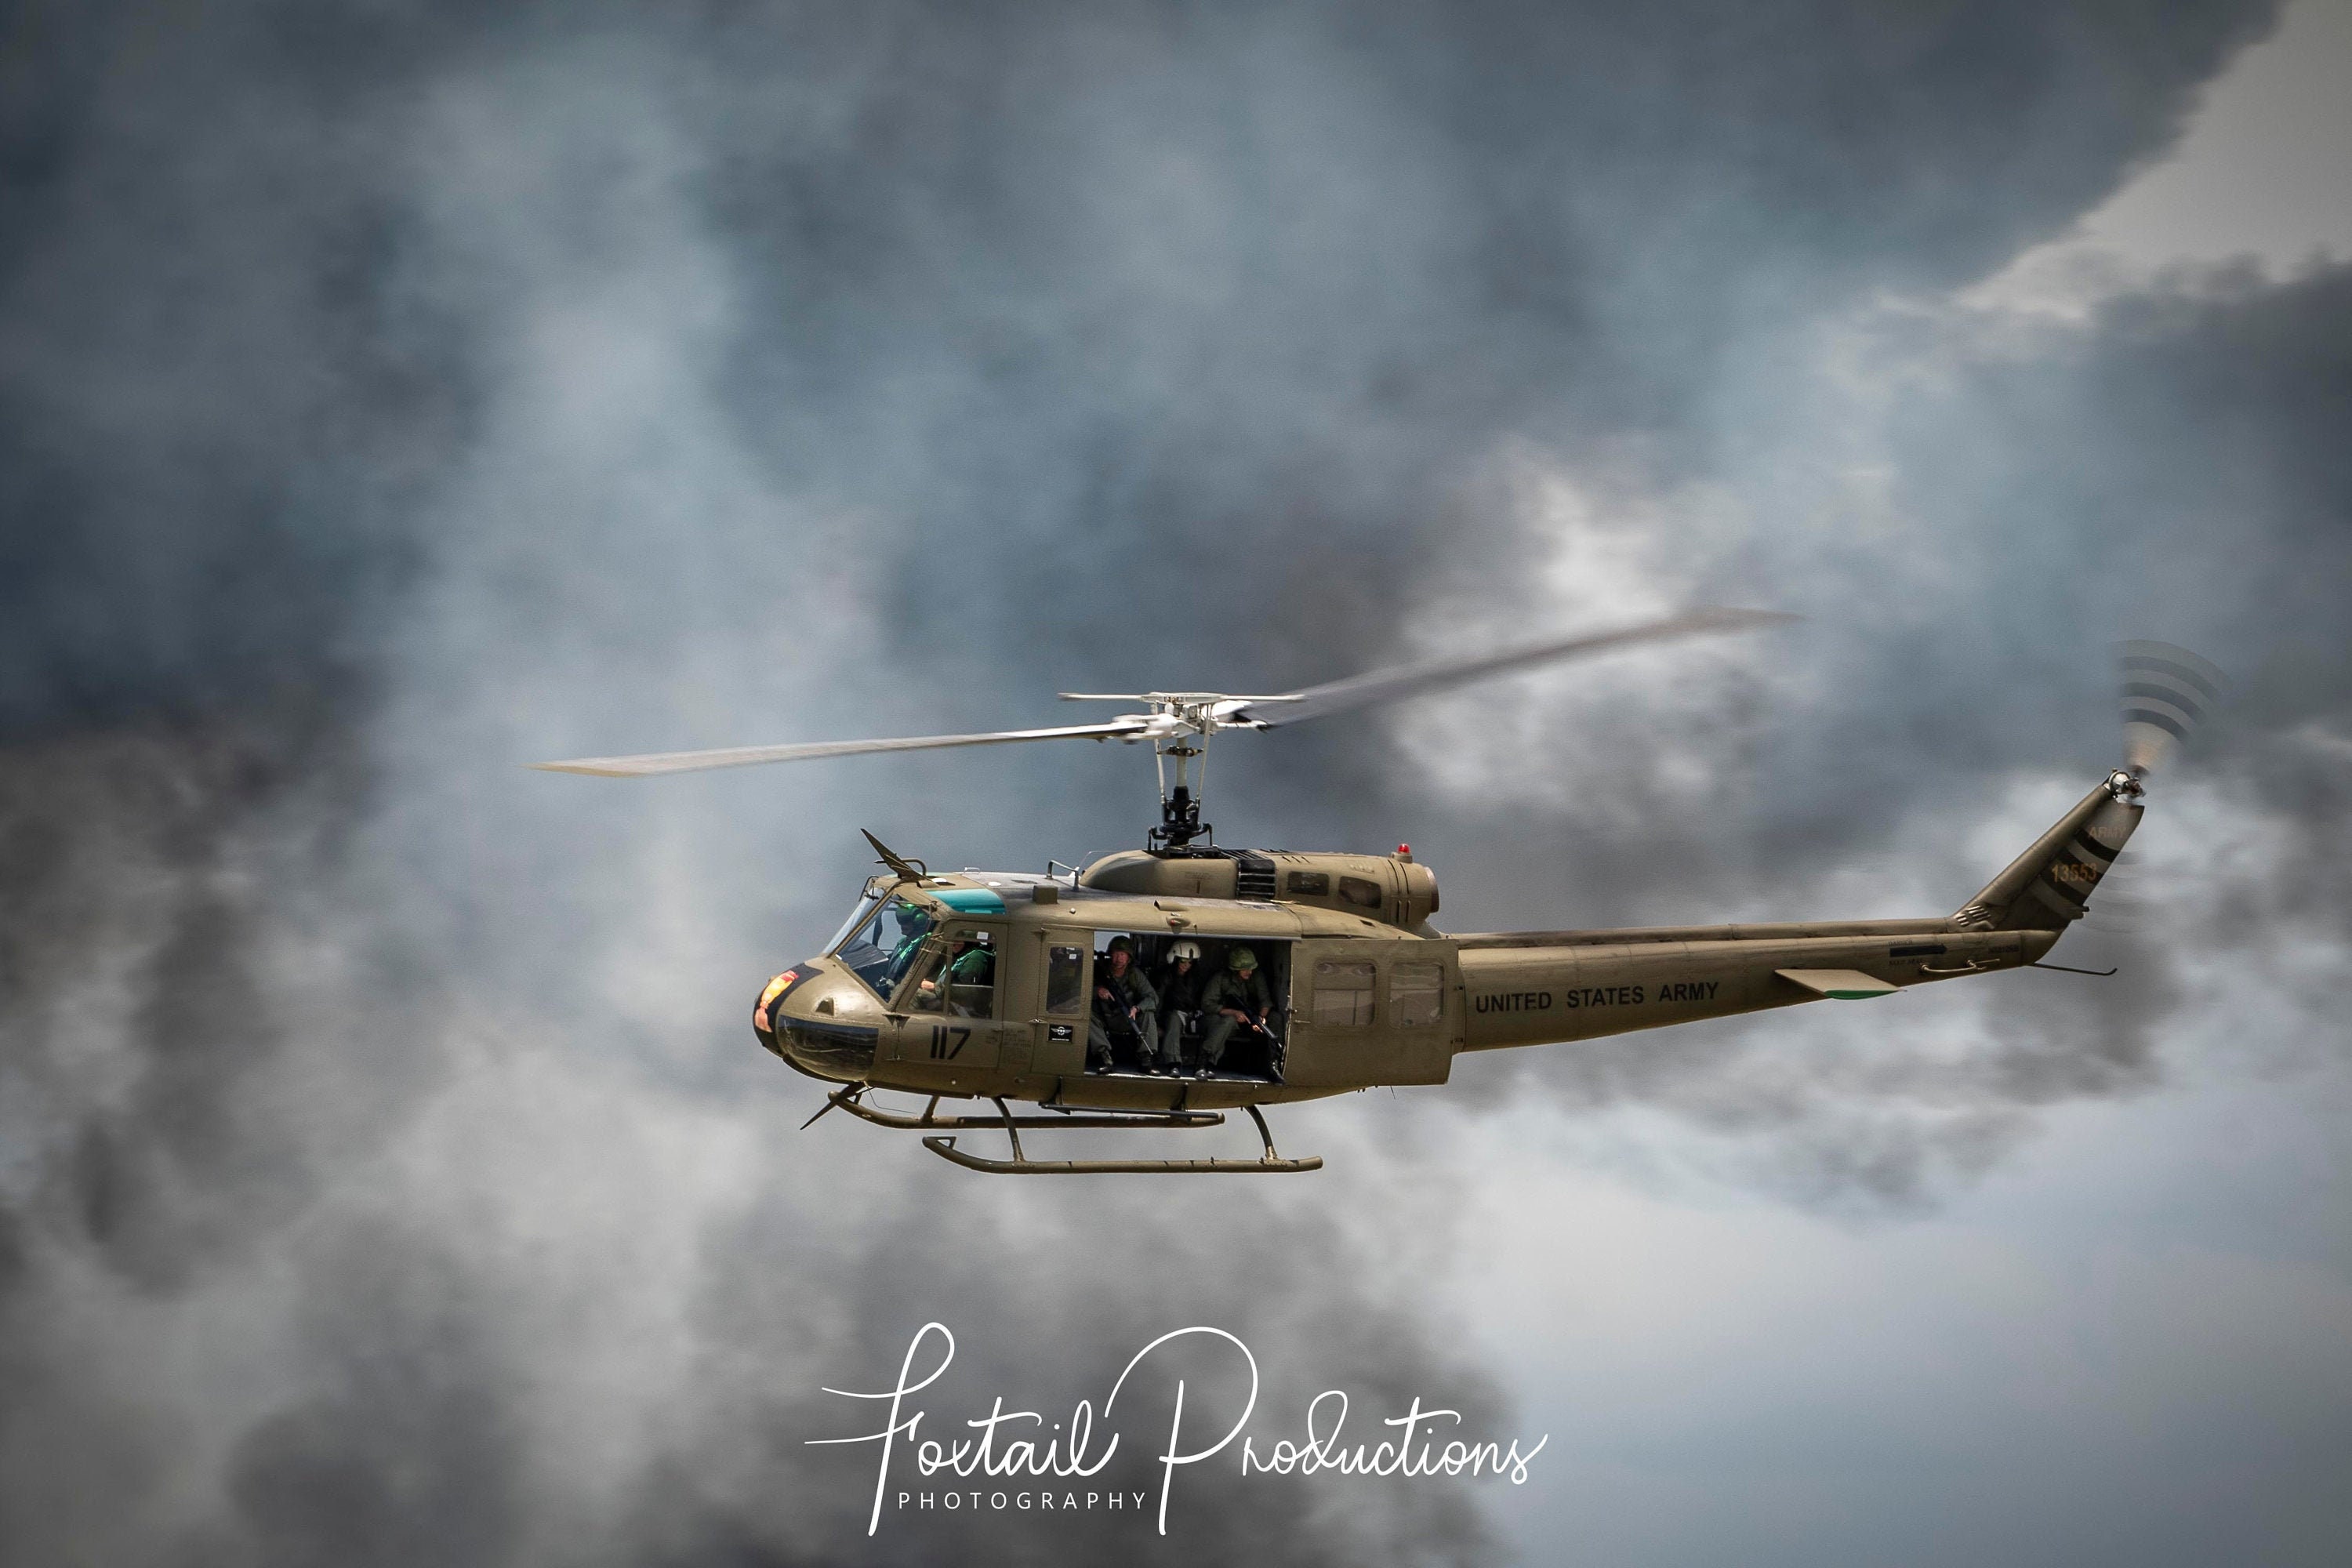 UH-1 HUEY HEMET-RYAN FIREFIGHTER HELICOPTER 11x14 SILVER HALIDE PHOTO PRINT 